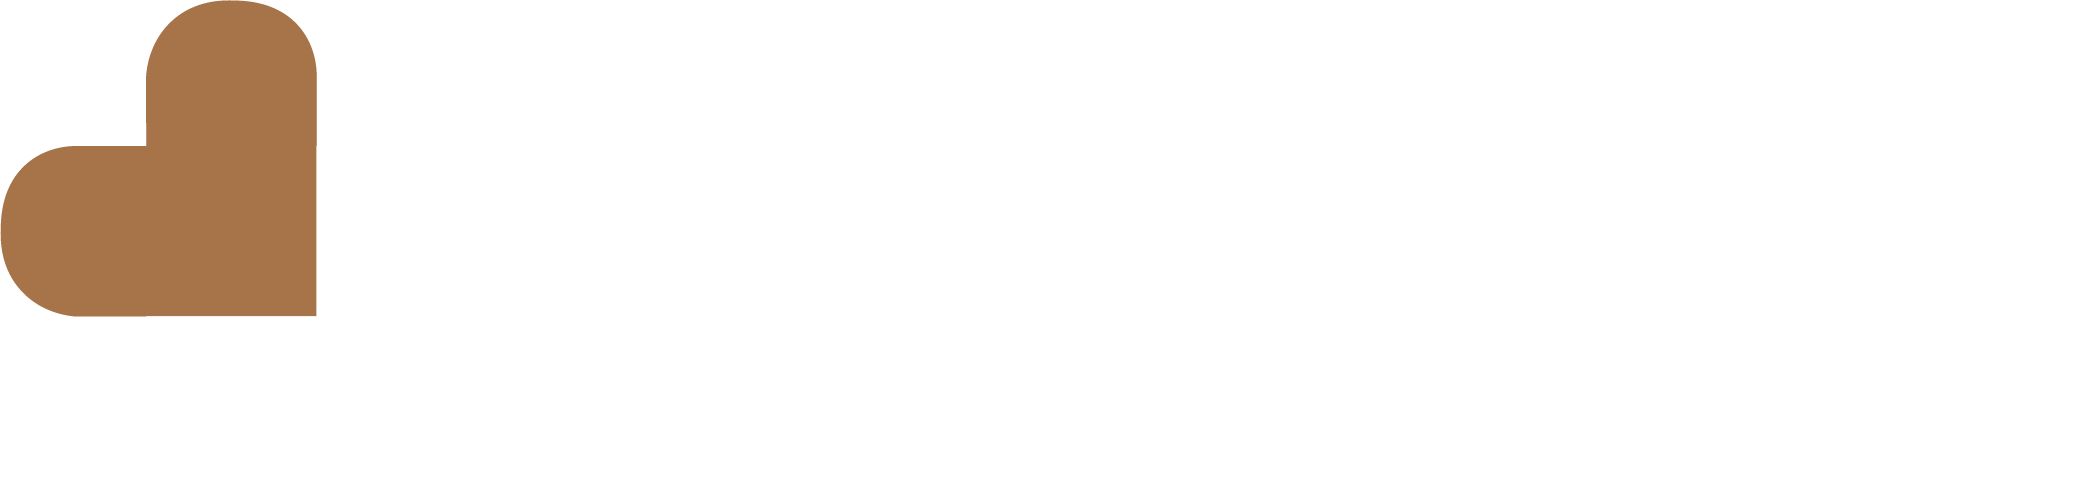 Beacon Family Health Care